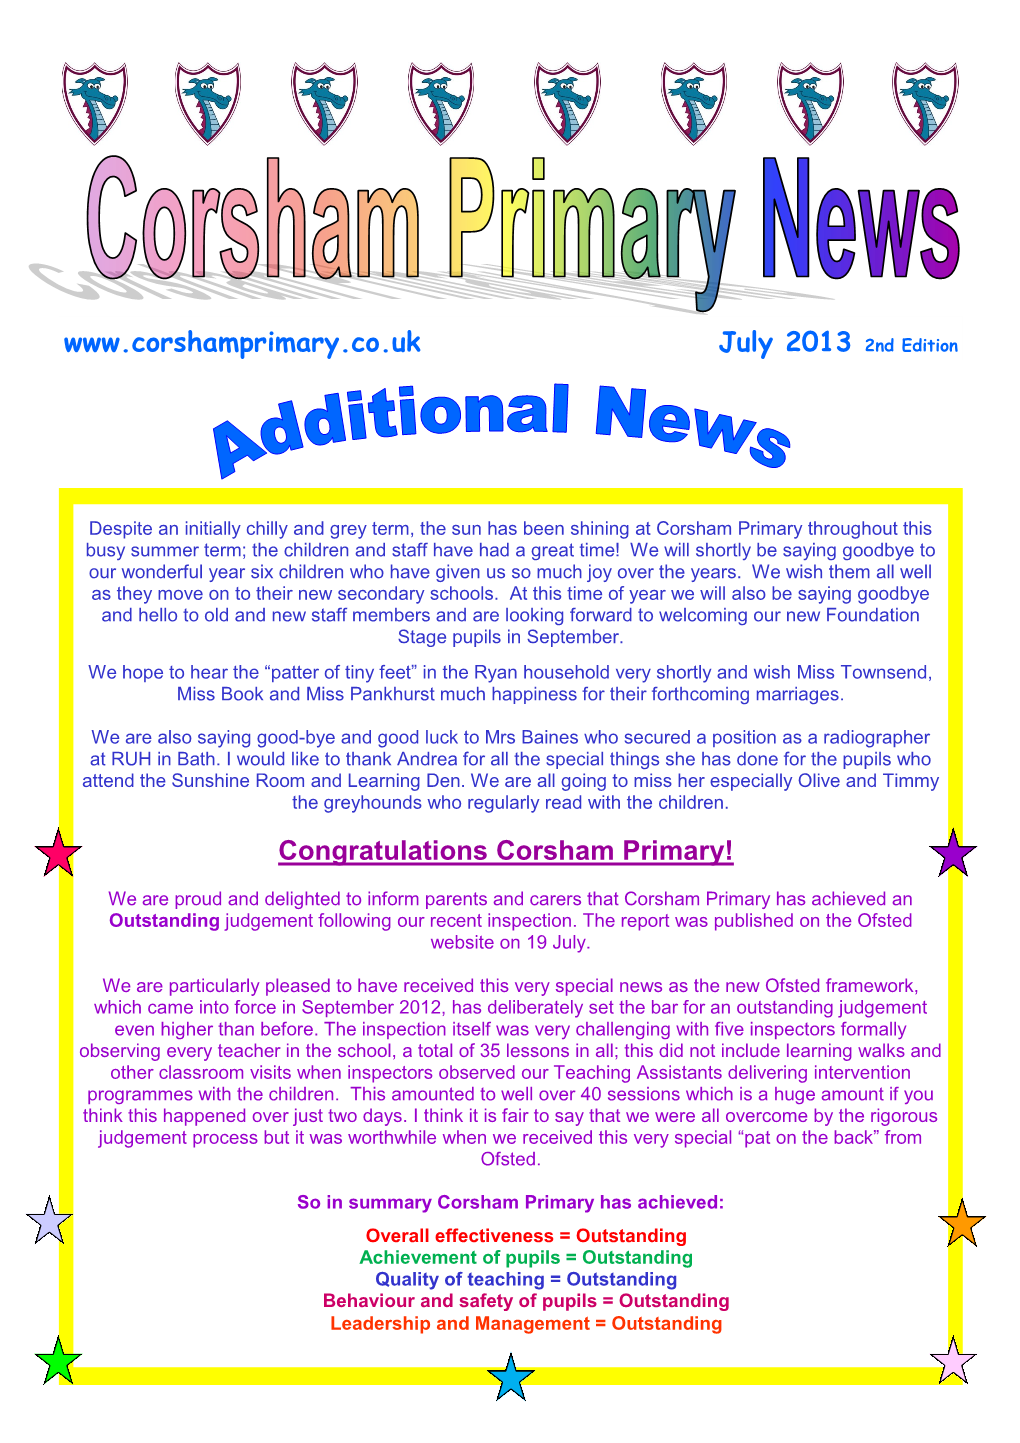 Congratulations Corsham Primary!